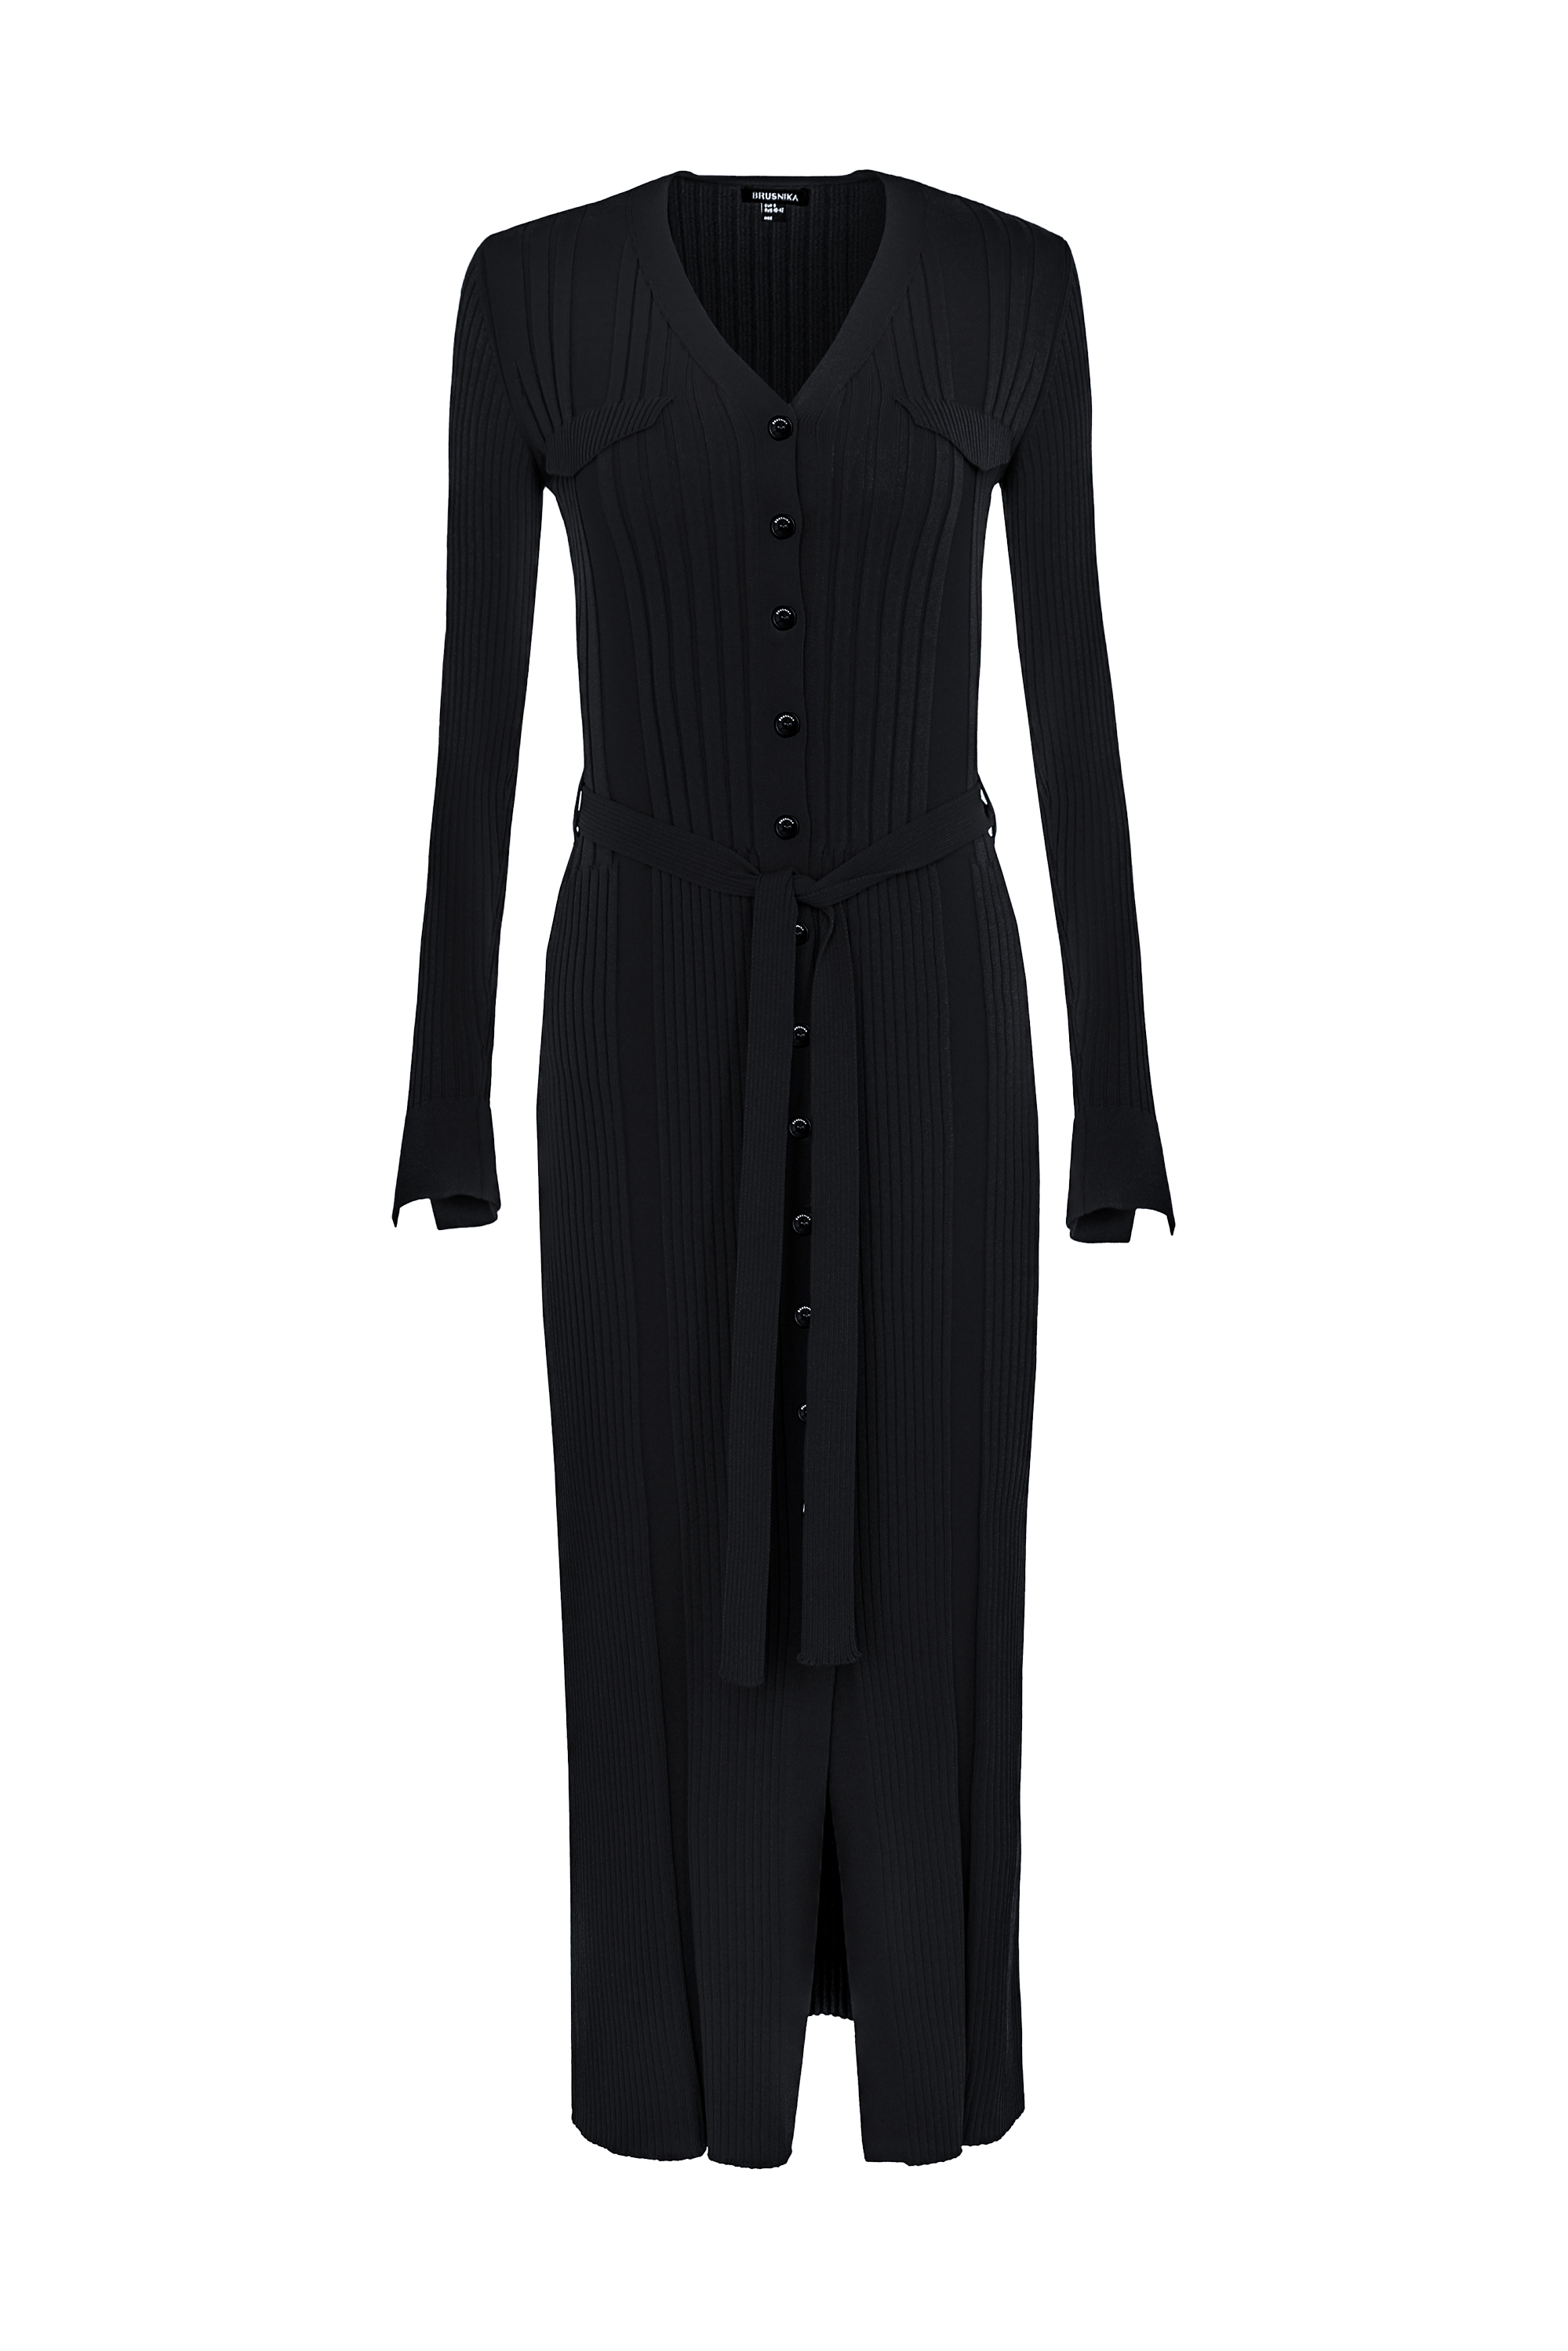 Dress 3061-01 Black from BRUSNiKA